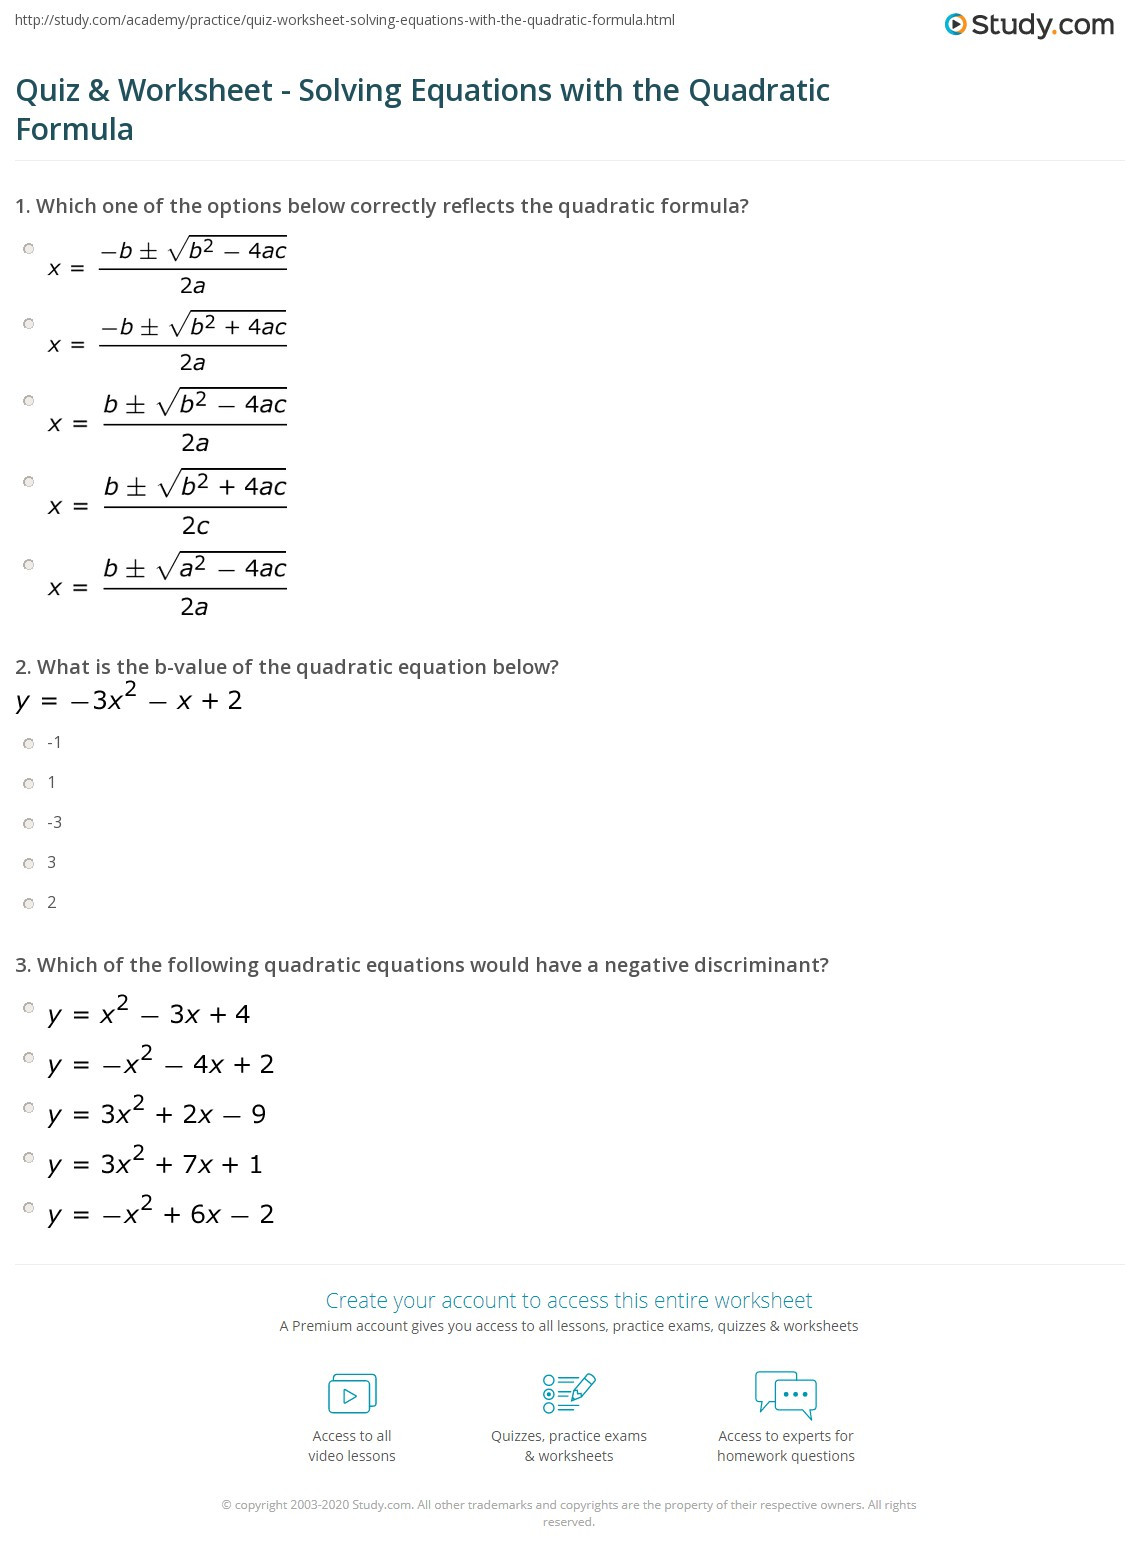 Solving Quadratic Equations Worksheet Quiz &amp; Worksheet solving Equations with the Quadratic